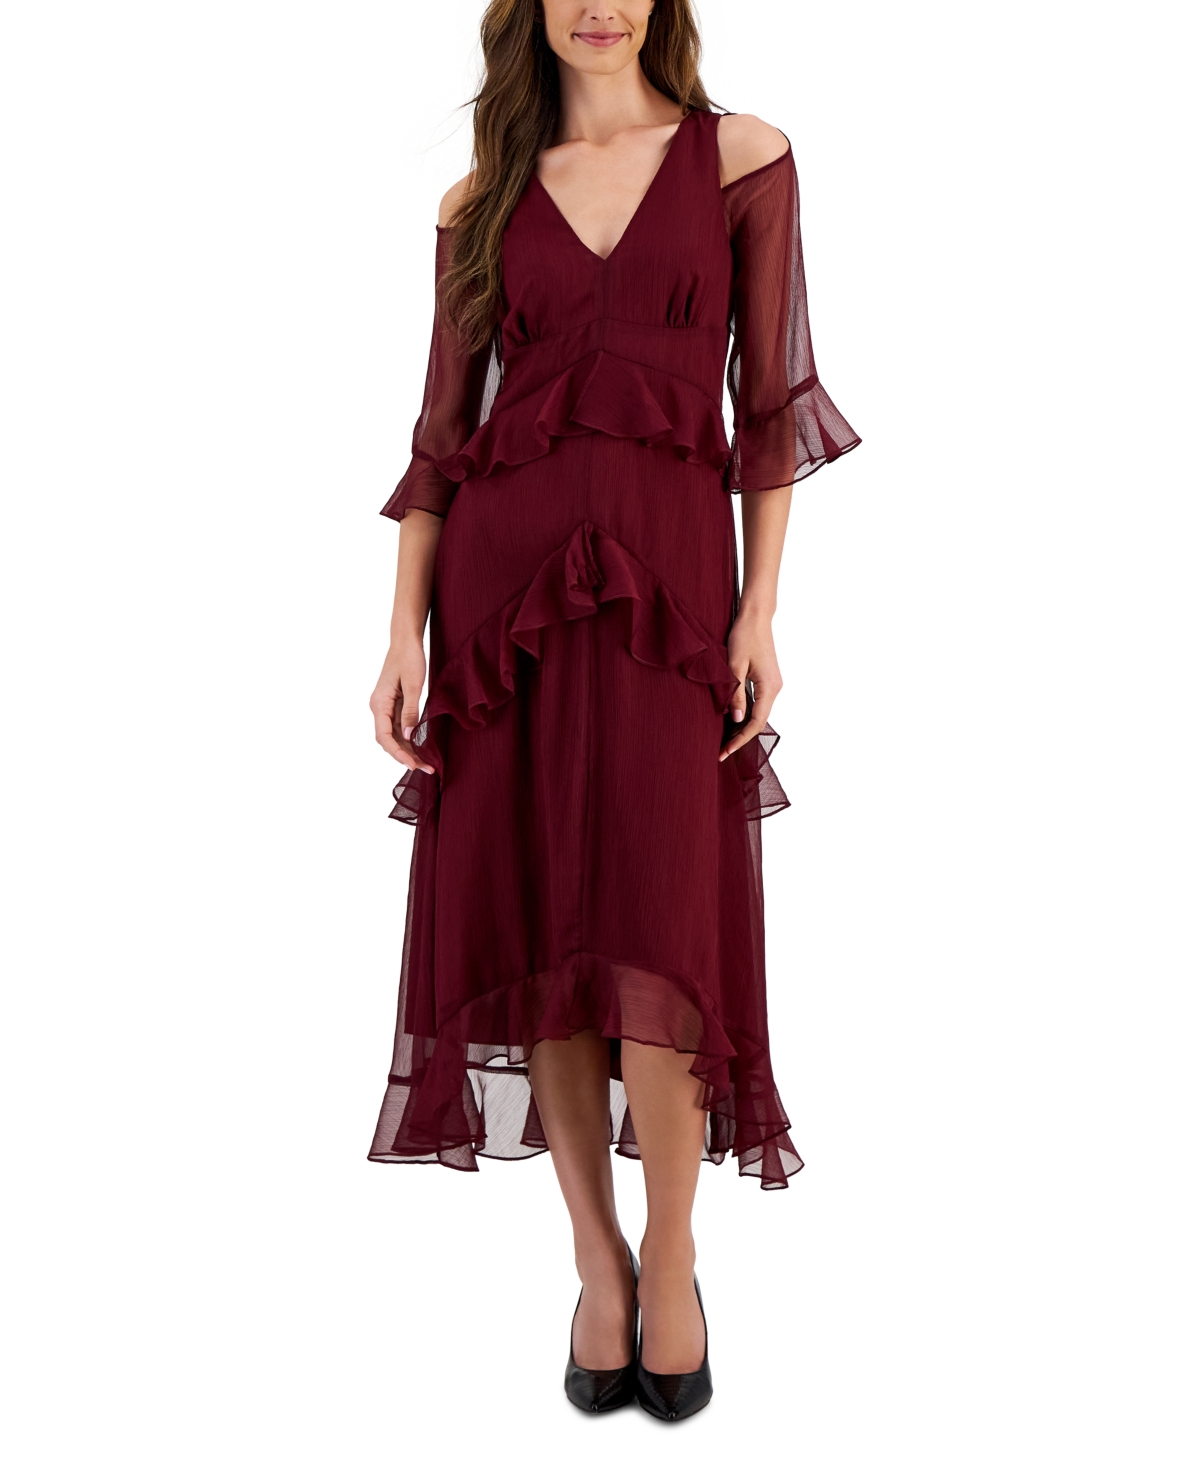 Buy Boardwalk Empire Inspired Dresses Tahari Asl Womens Ruffled Cold-Shoulder Midi Dress - Burgundy $159.00 AT vintagedancer.com